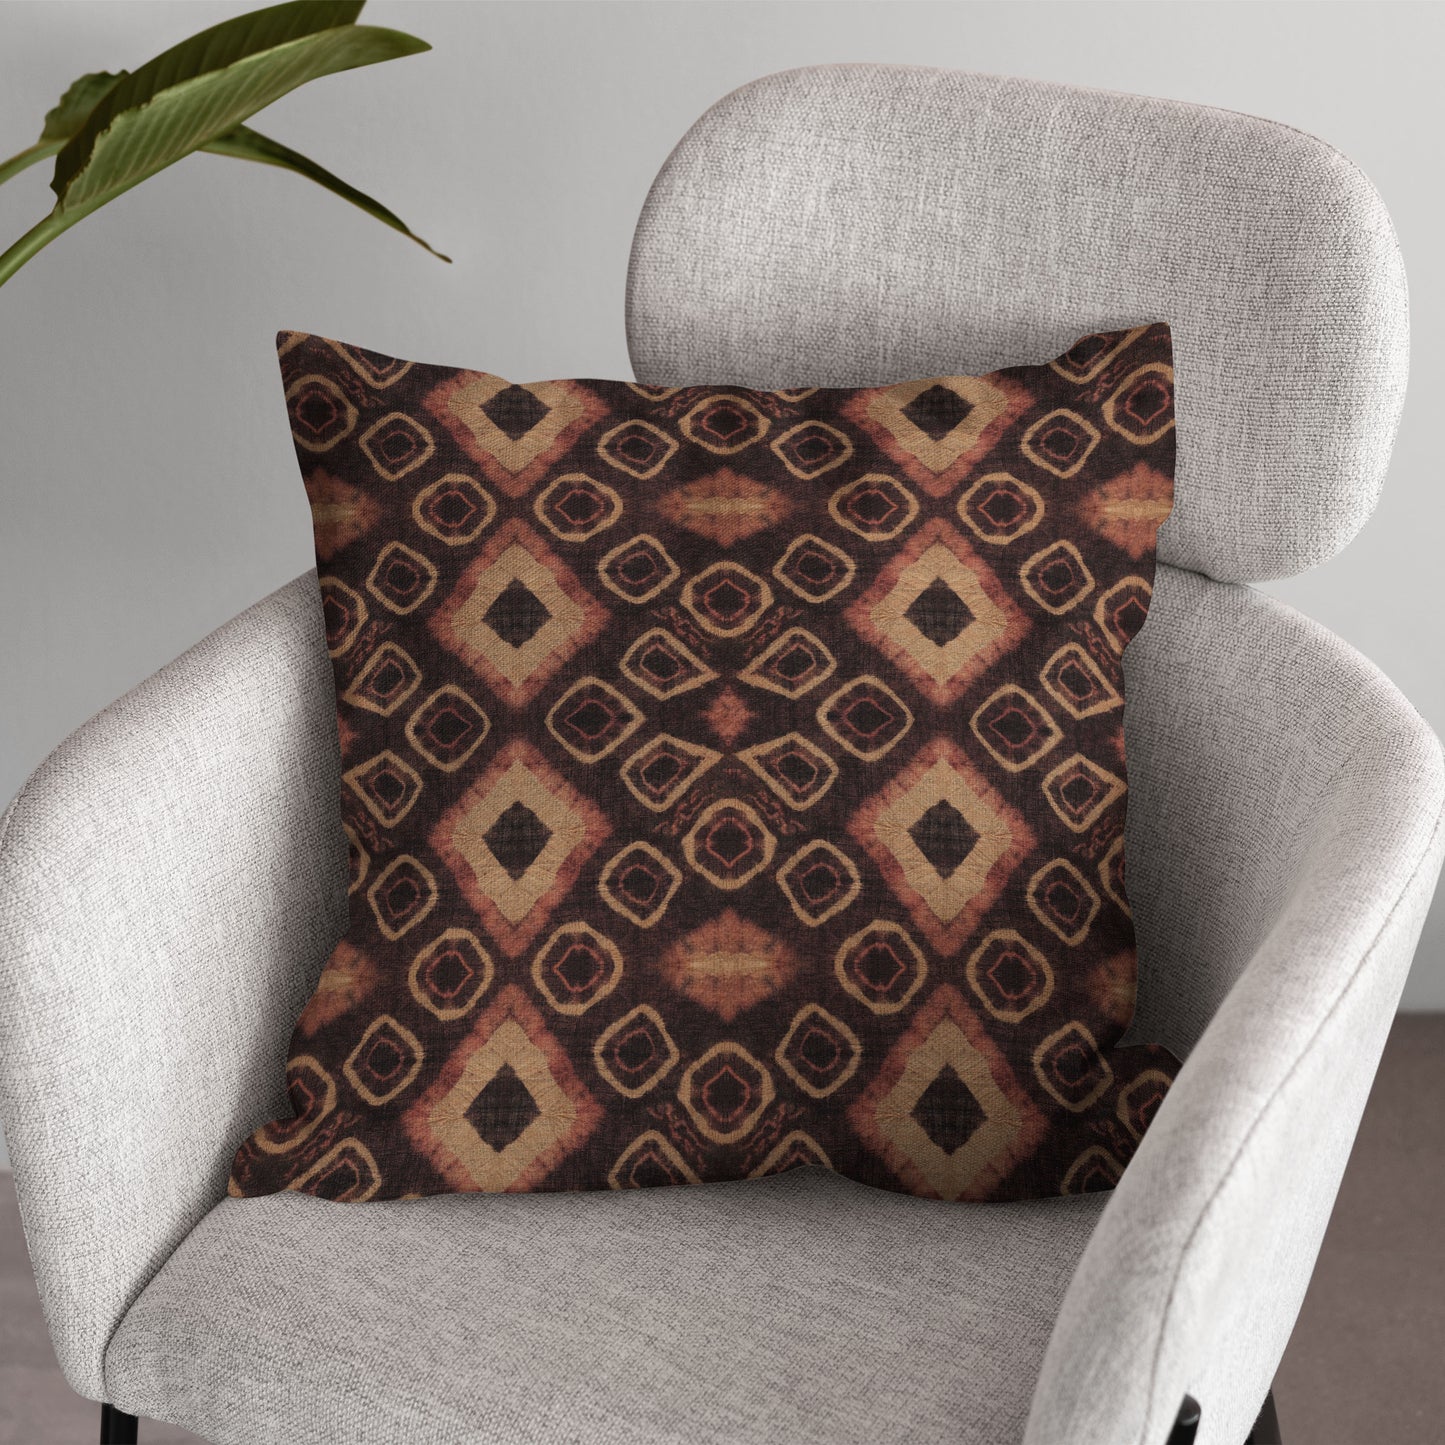 AnitaveeTextile African Fabric Tribal Pillows in Kuba Print - 3 Sizes